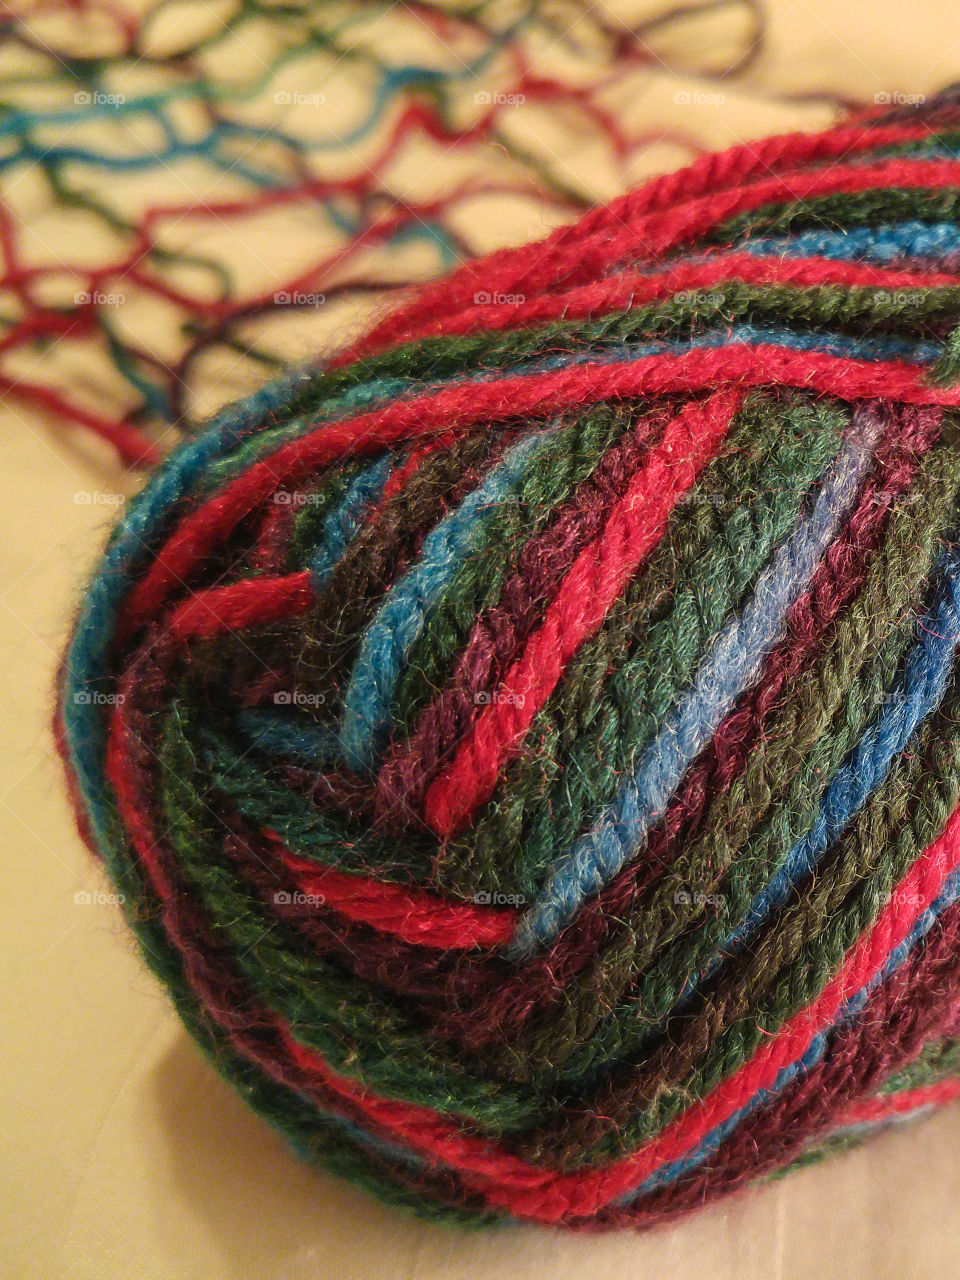 Multicolored ball of yarn